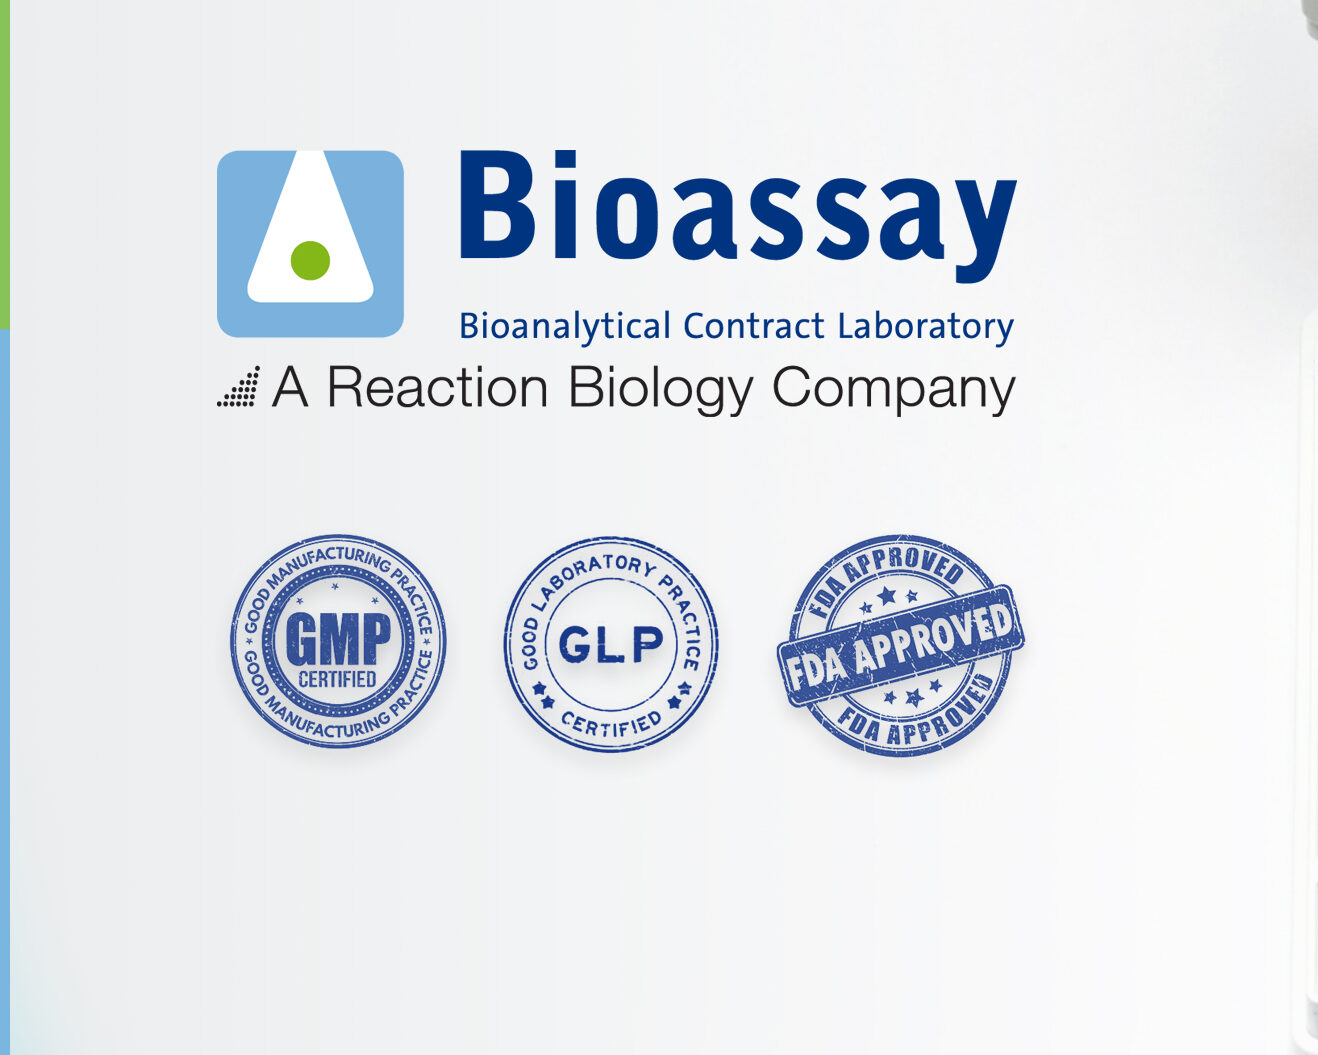 53902Bioassay bioanalytical method development and validation for GxP compliance